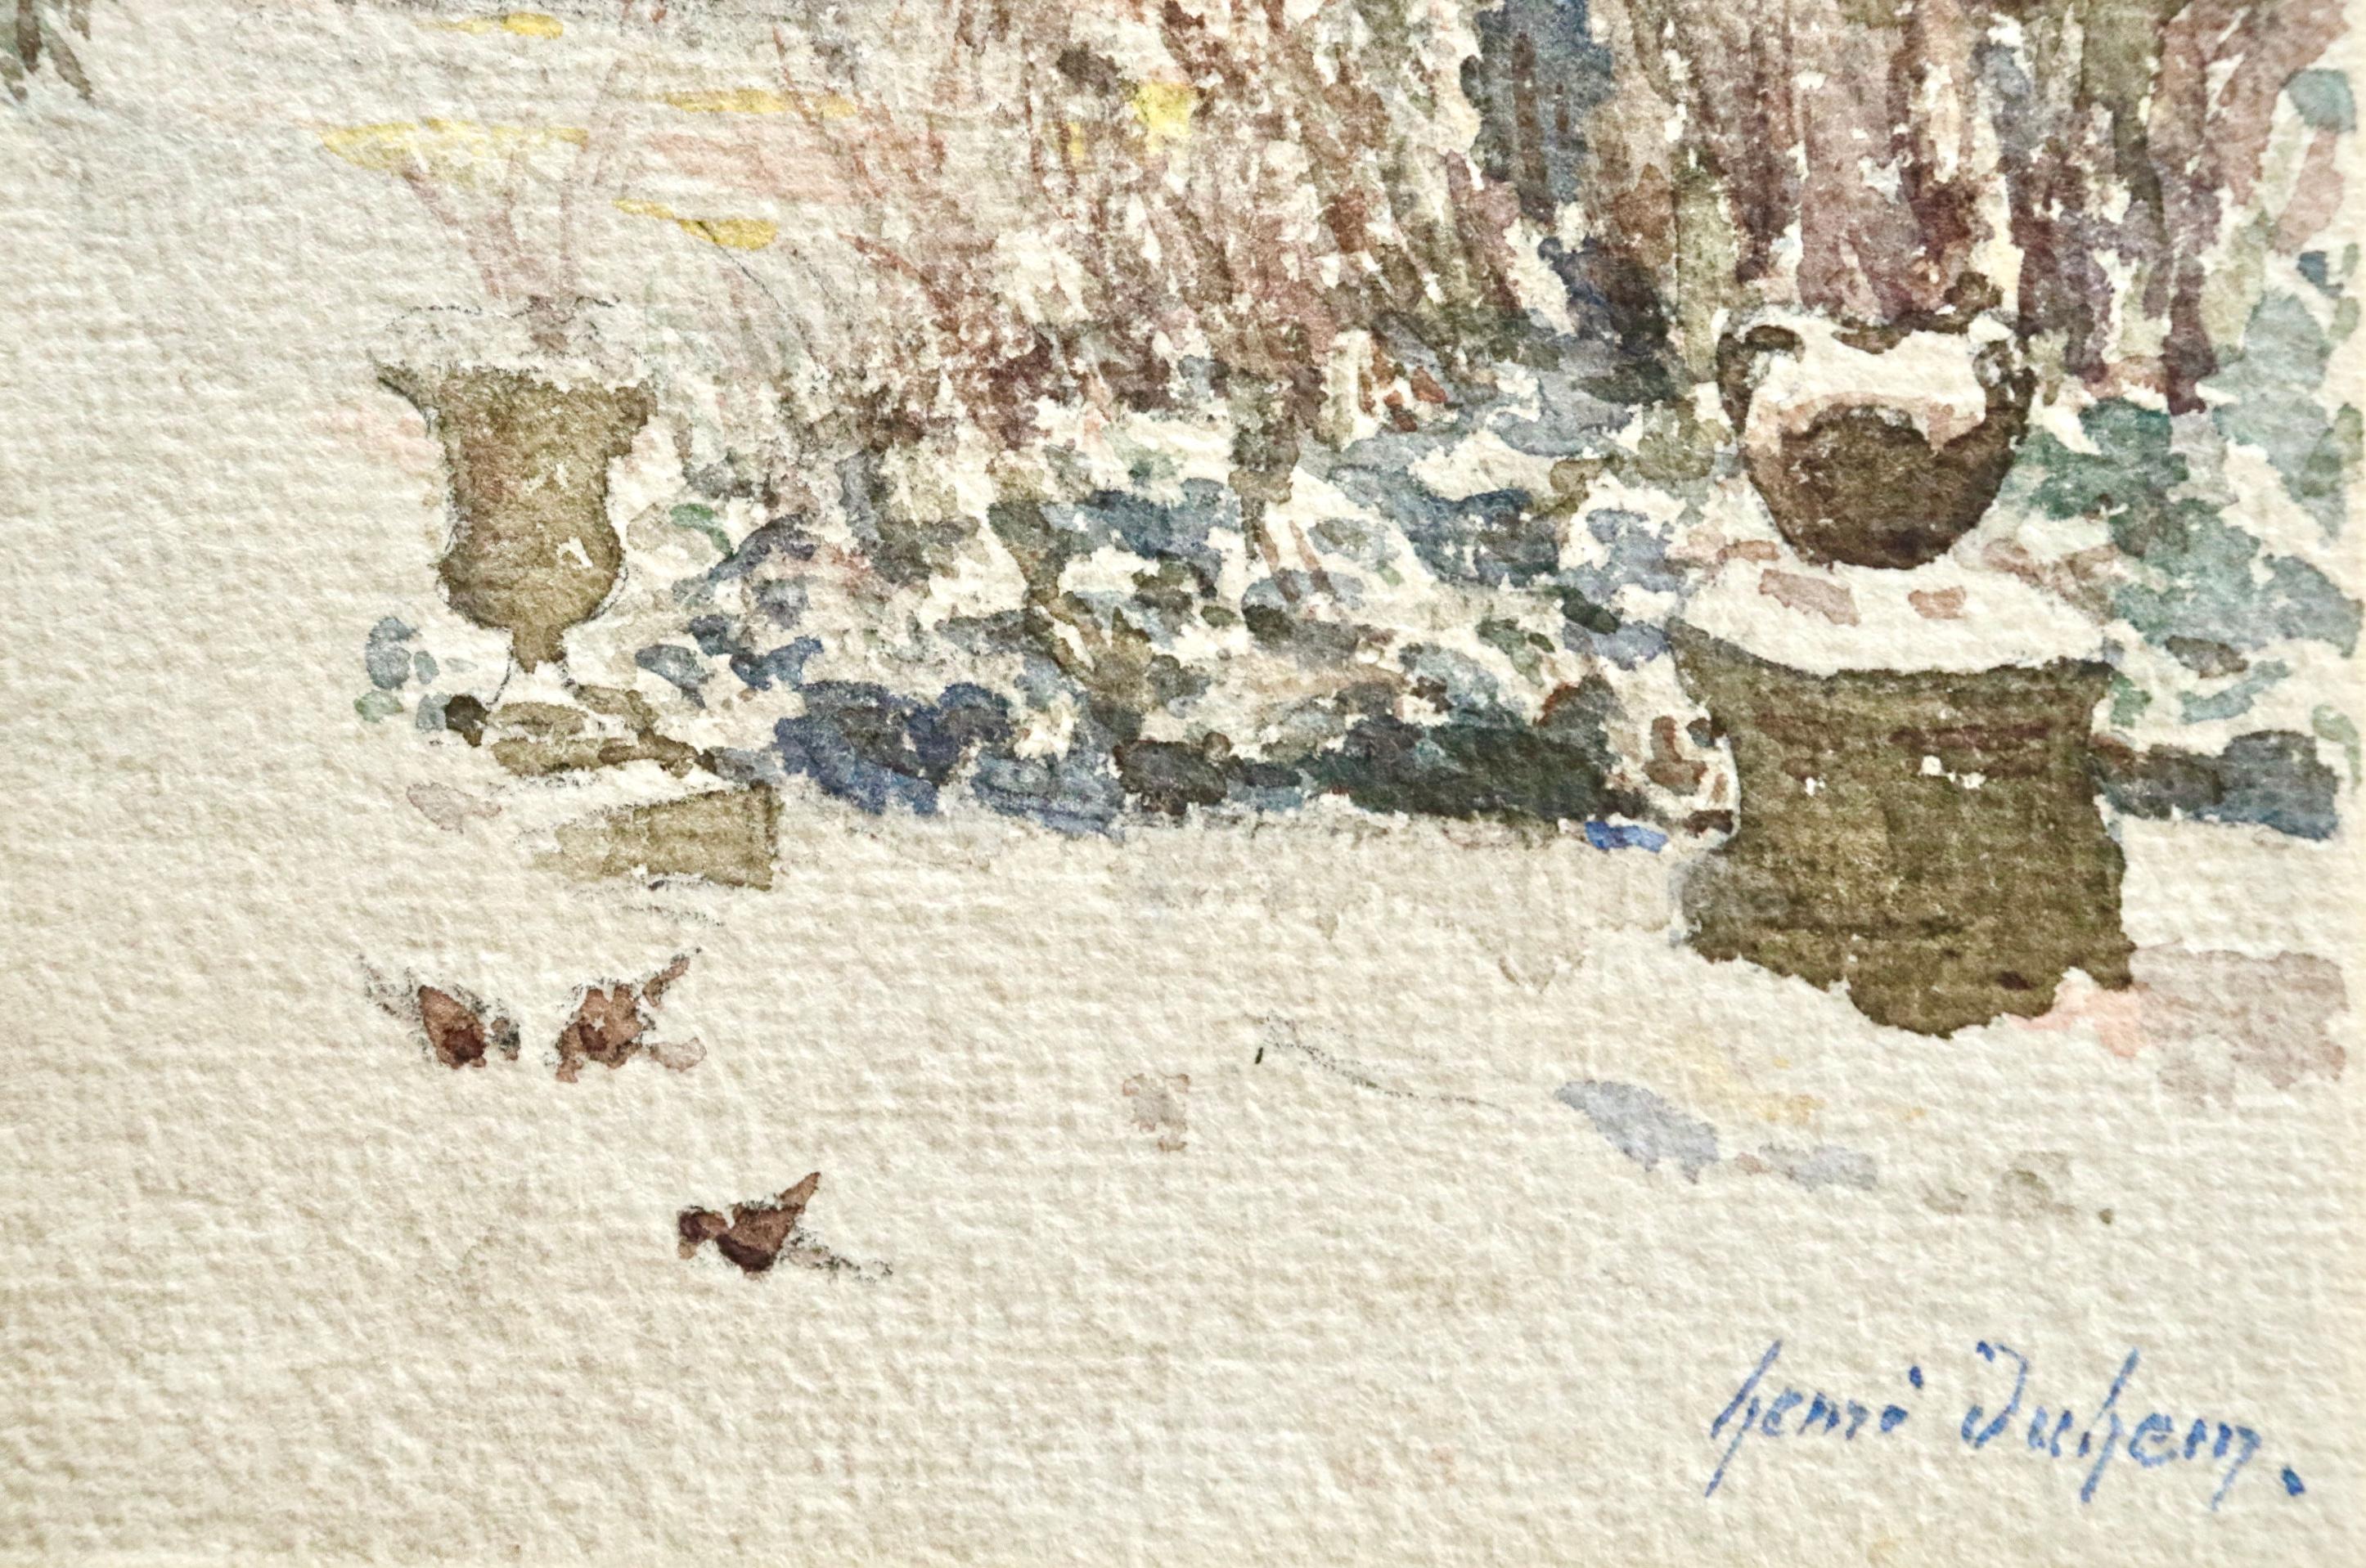 Oiseaux dans la neige - 19th Century Watercolor, Birds in Snowy Garden - H Duhem - Beige Landscape Painting by Henri Duhem